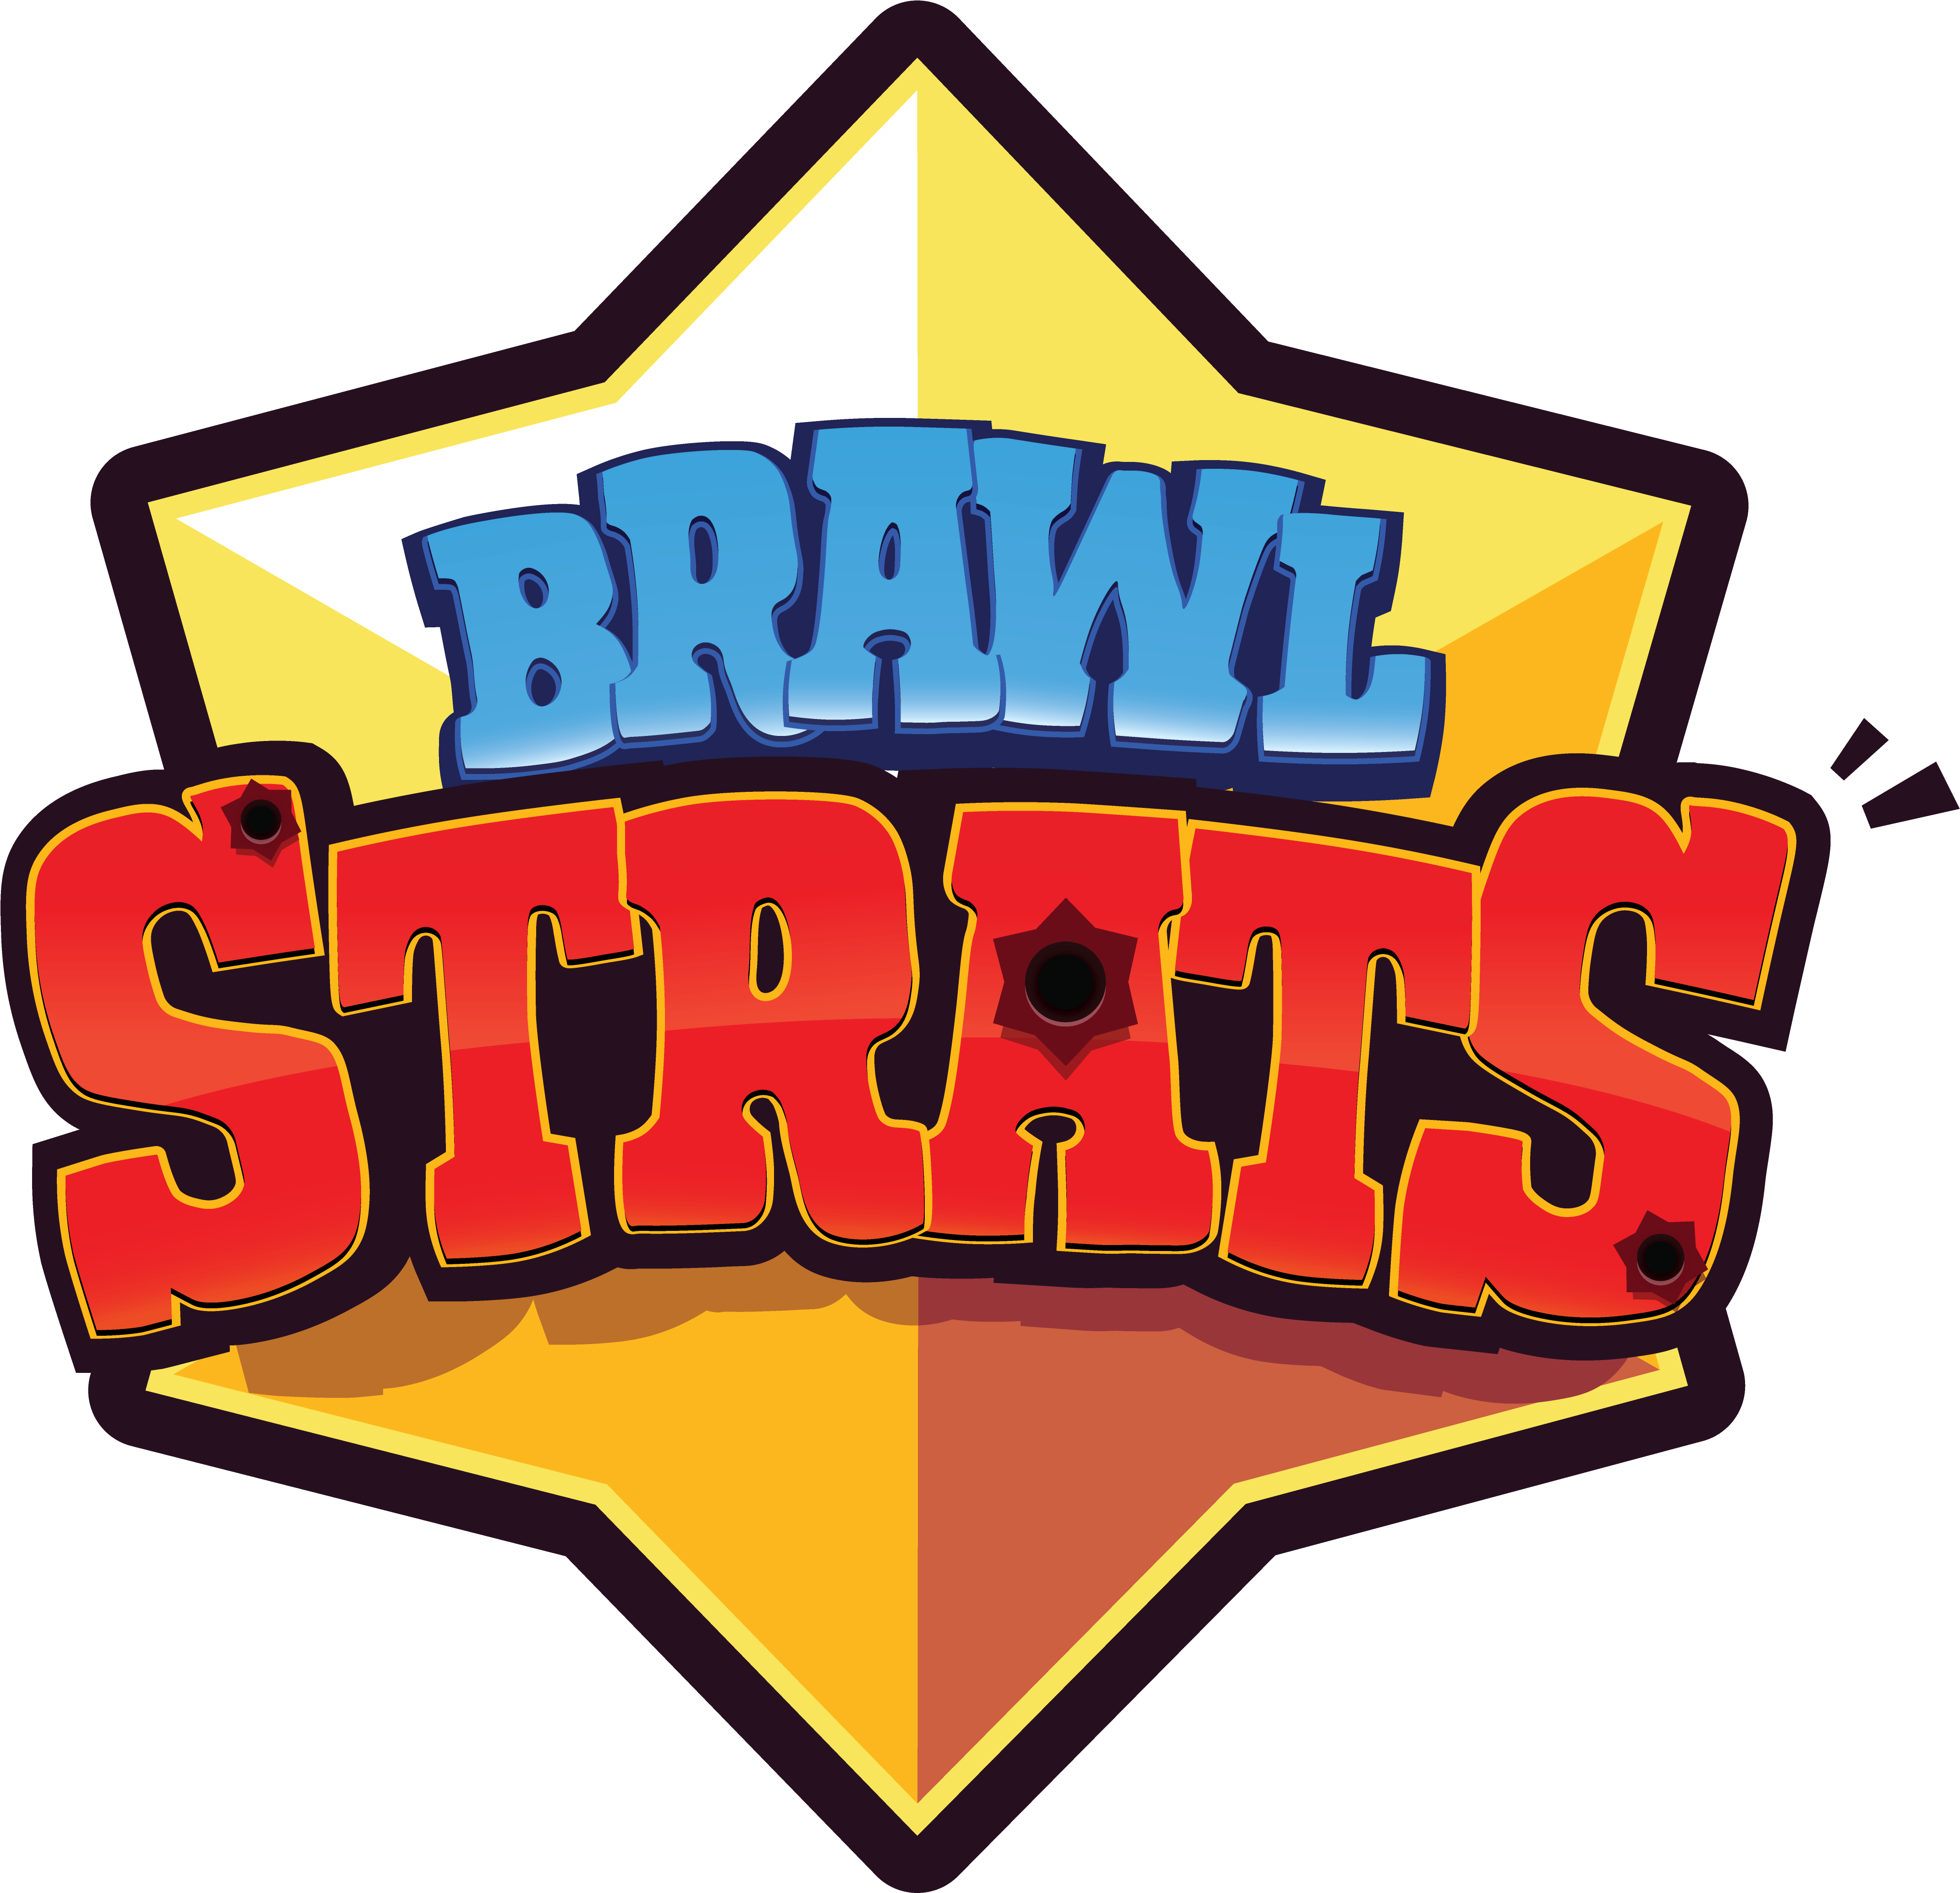 Official Brawl Stars Brawl Strats Logo Clipart Large Size Png Image Pikpng - brawl stars logo navy